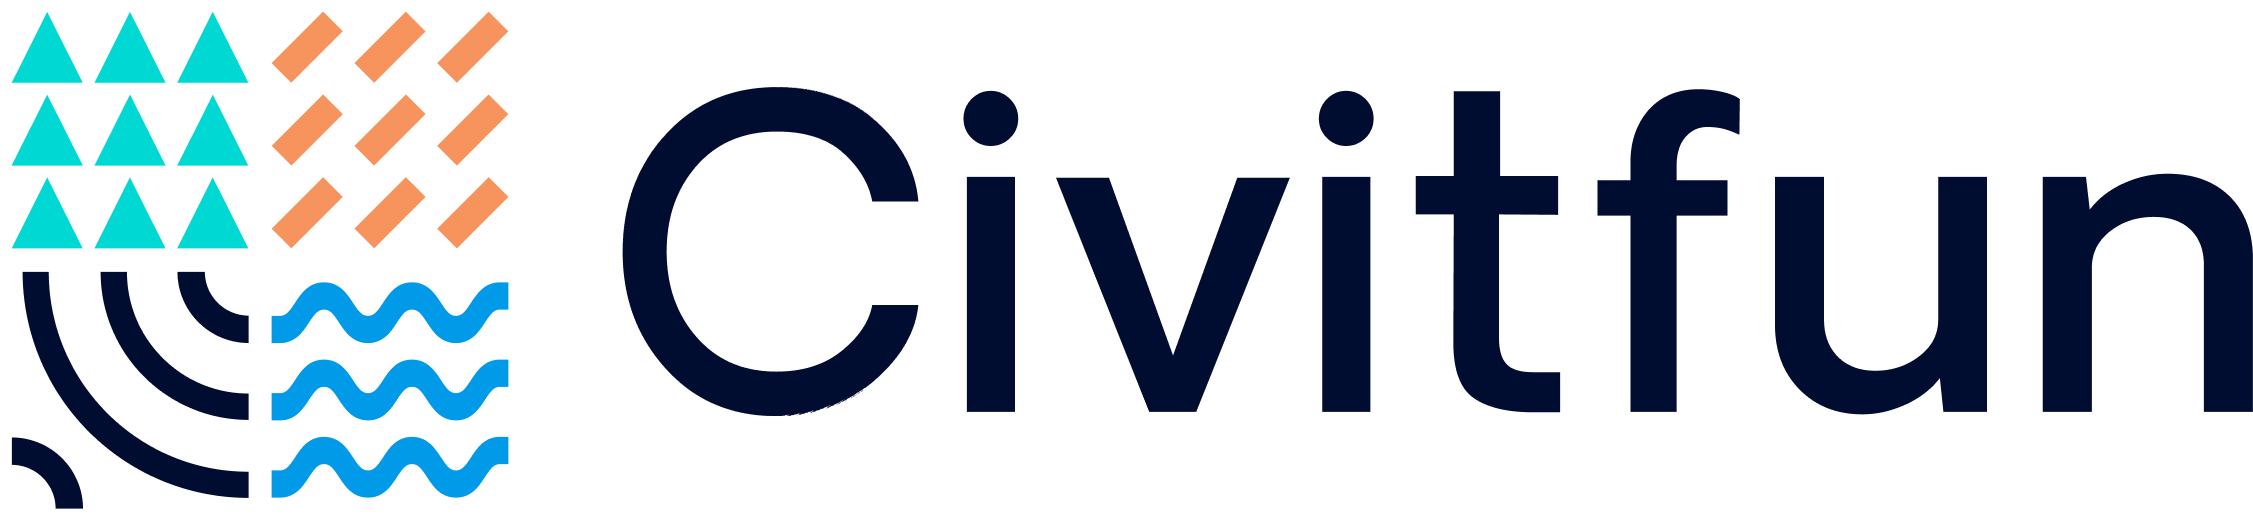 Civitfun-logo-Azul